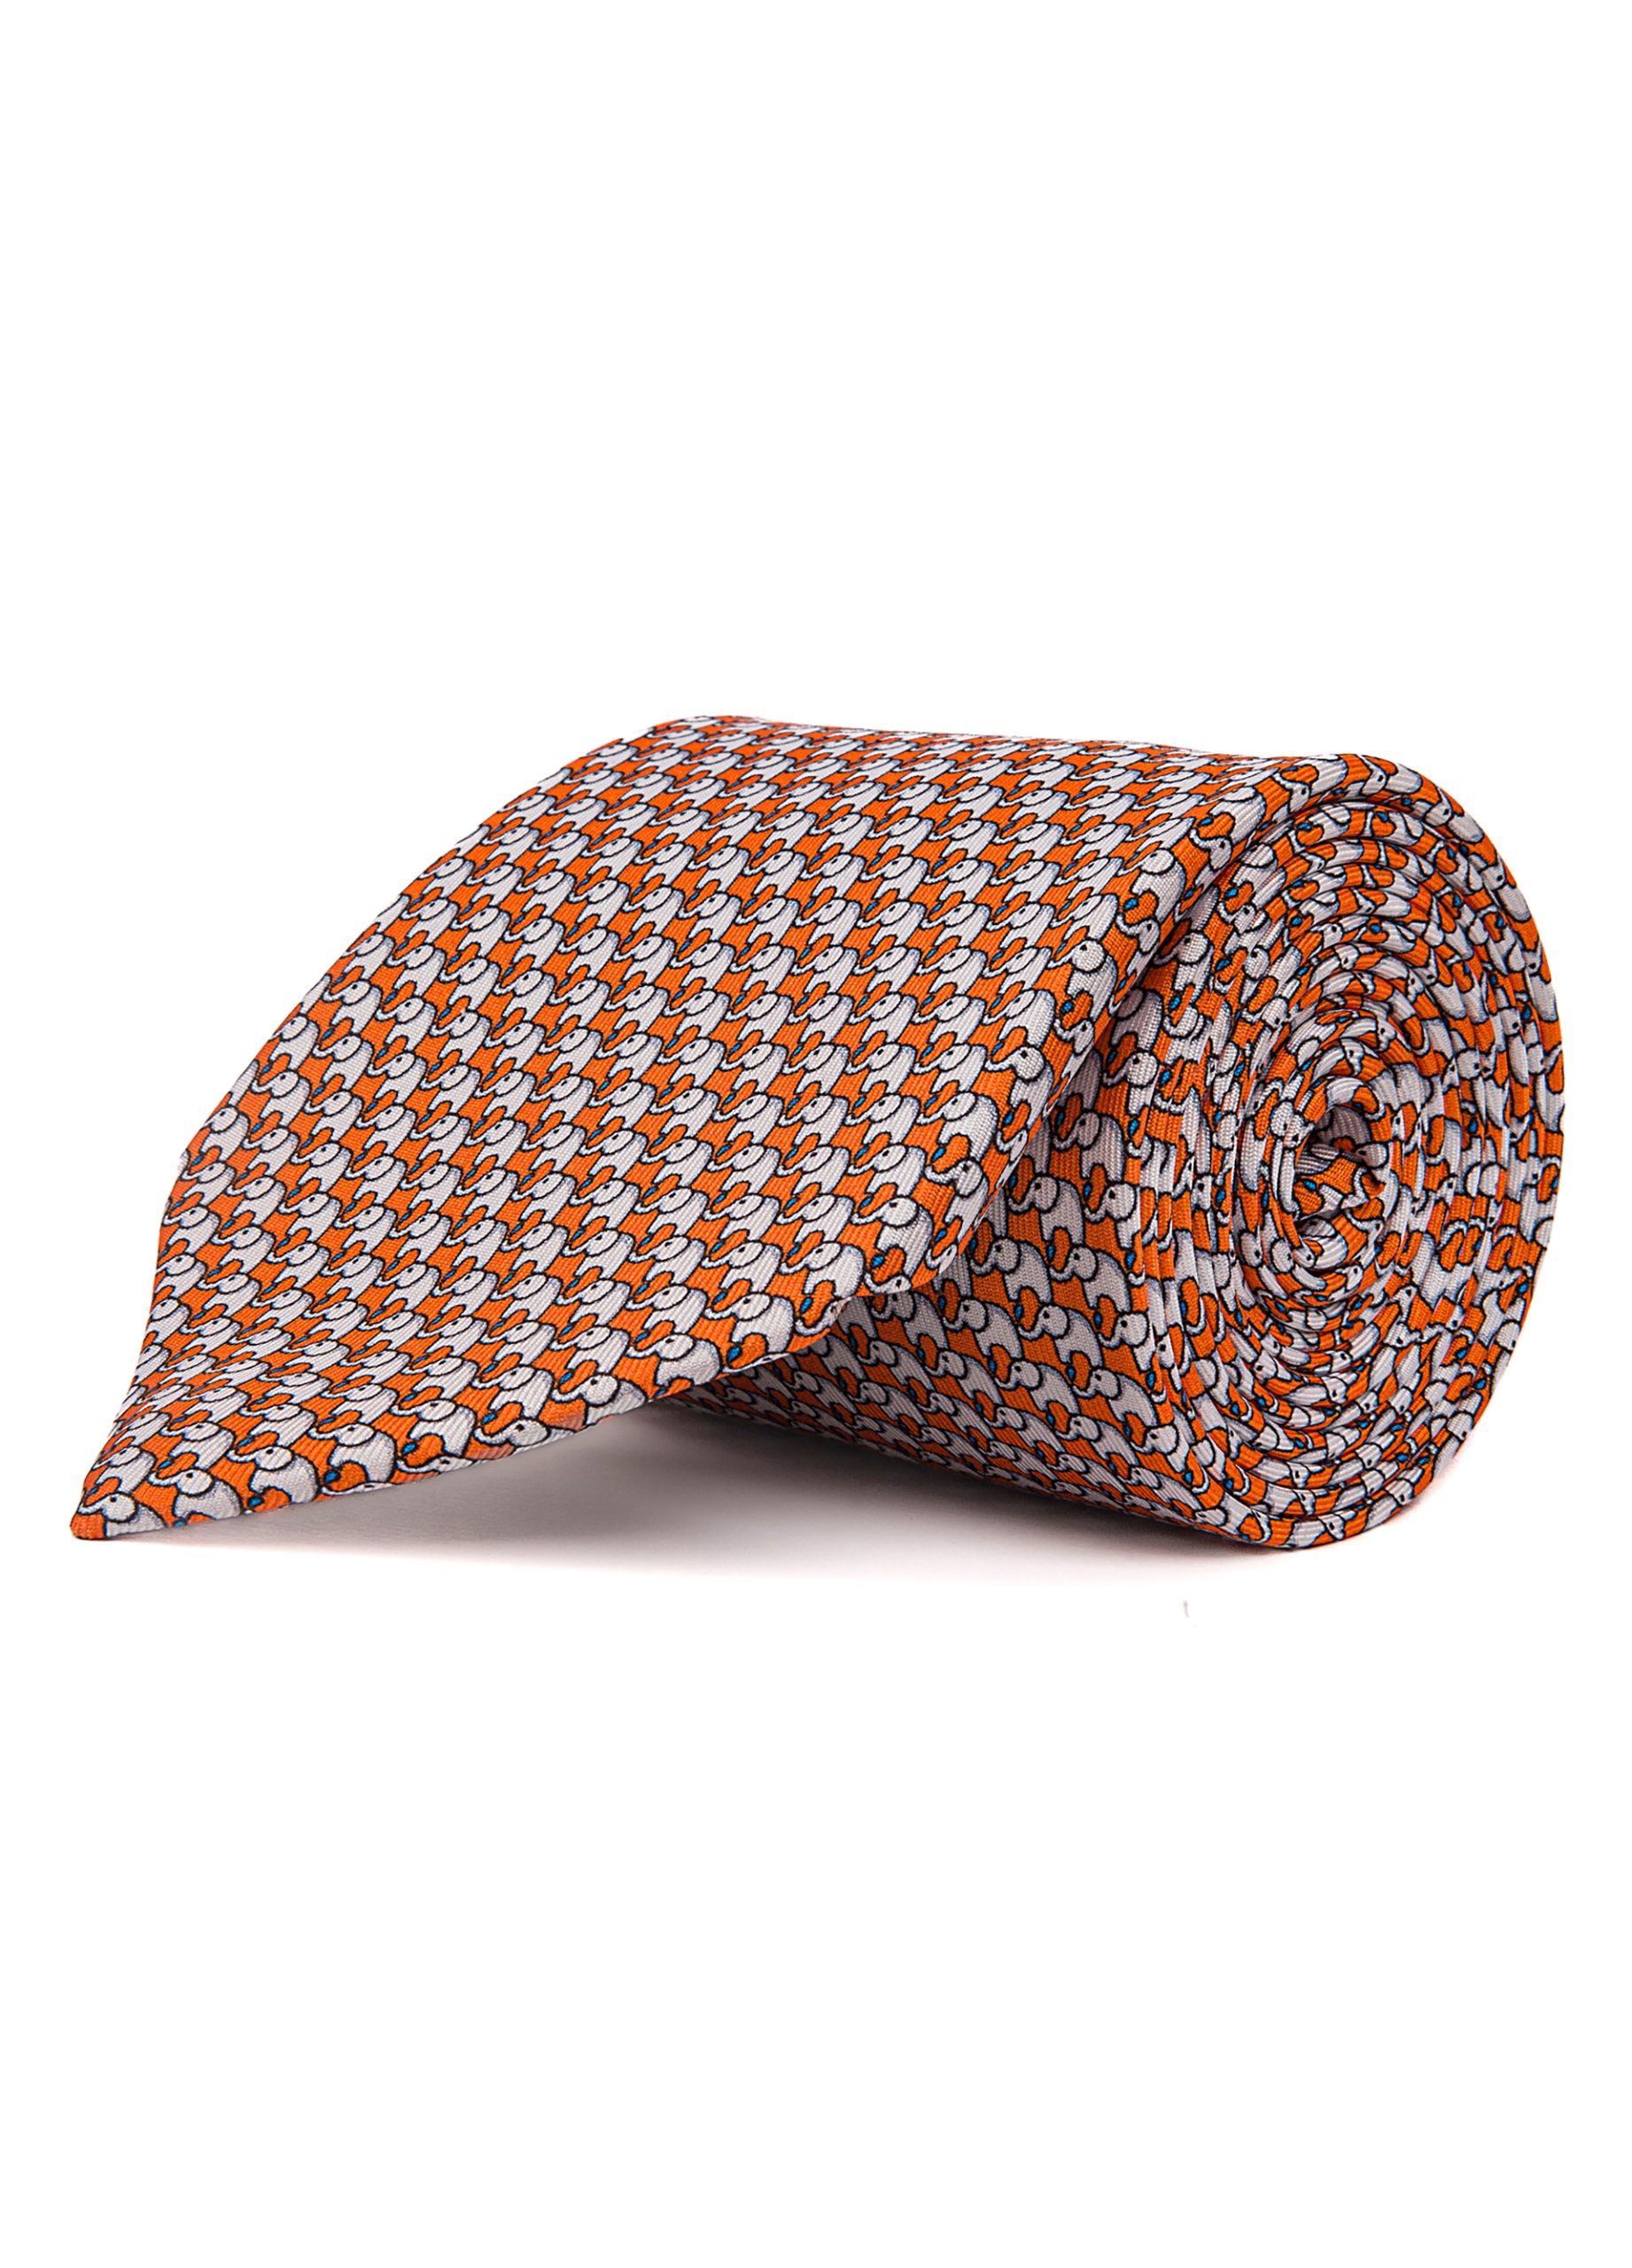 Roderick Charles London orange men’s tie